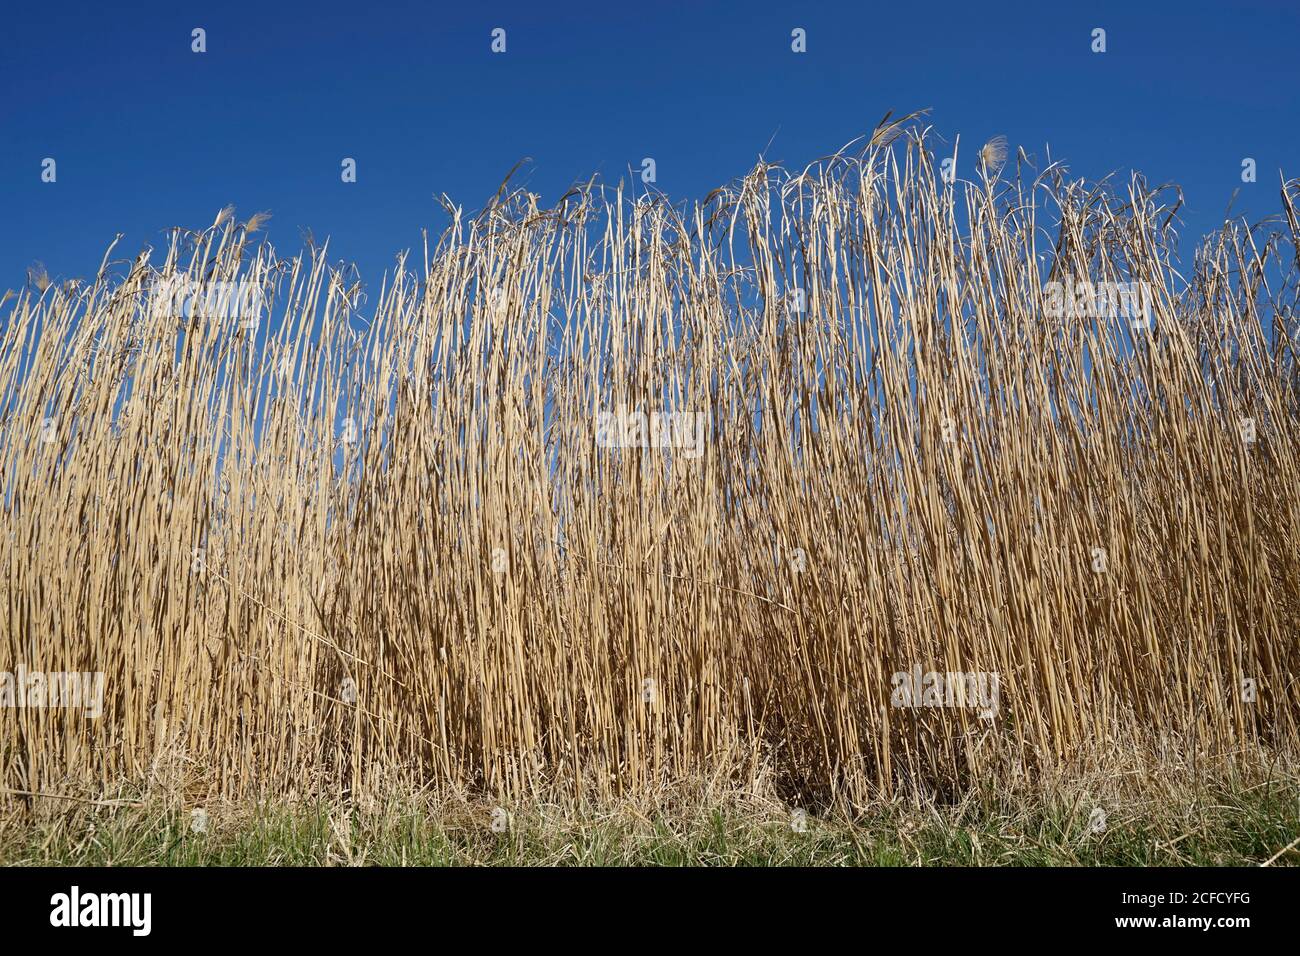 Germany, Bavaria, Upper Bavaria, Altötting district, giant Chinese reed, elephant grass, before harvest Stock Photo